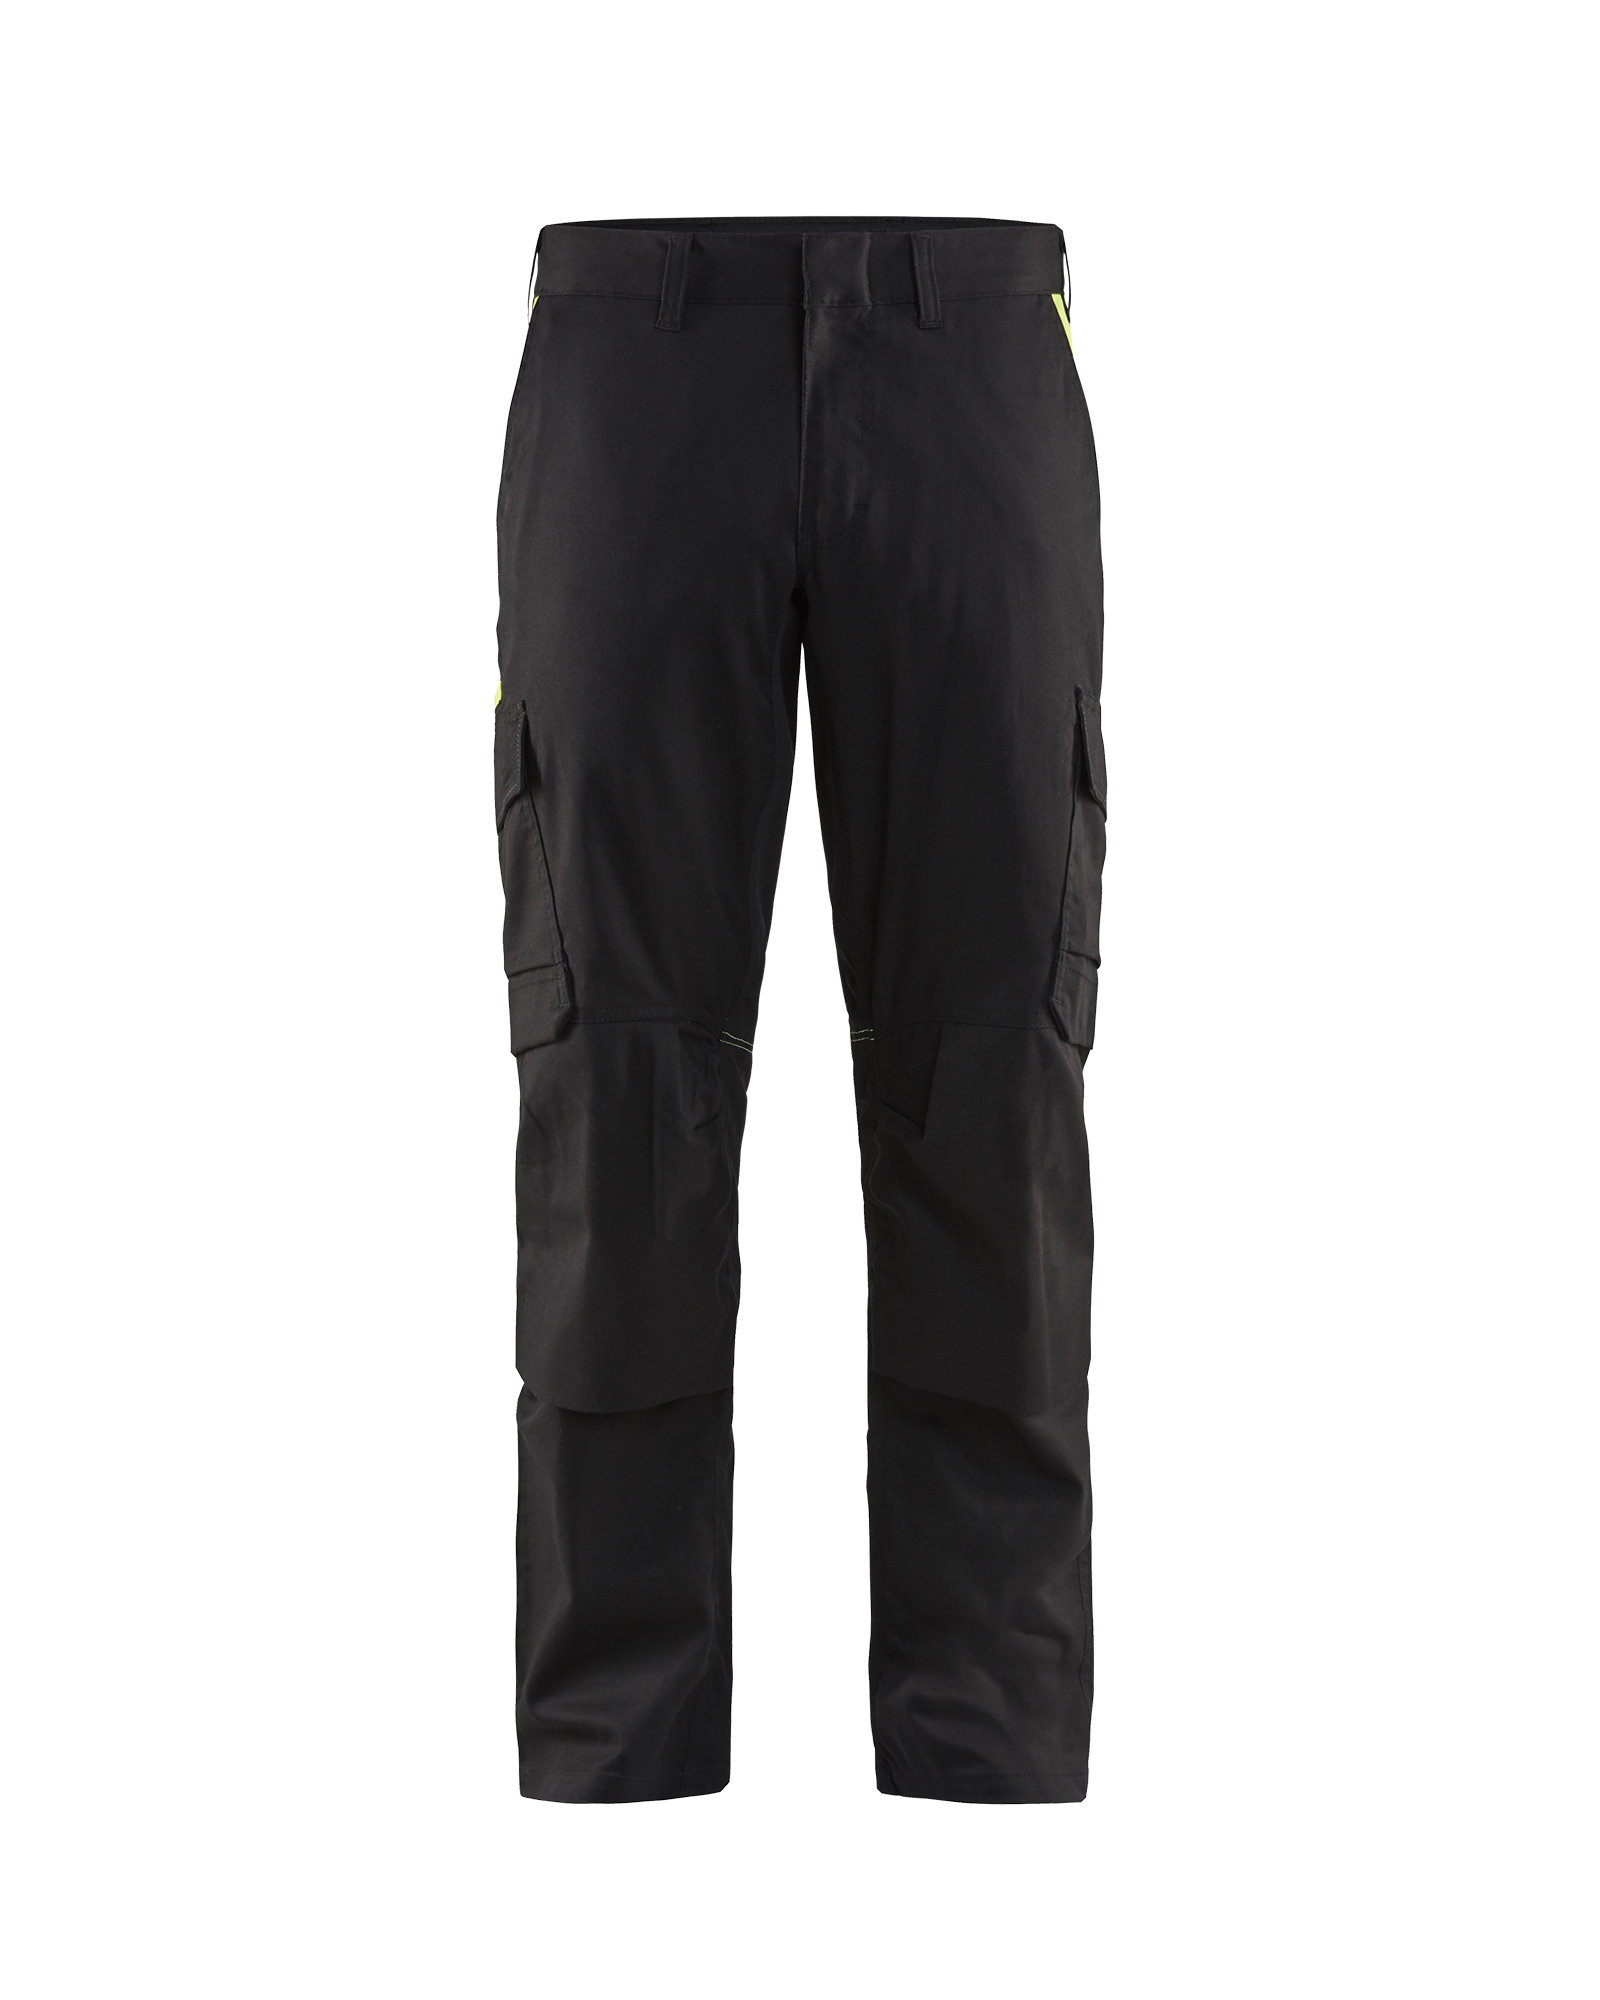 Pantalon industrie avec poches genouillères stretch 2D Blåkläder 1448 Noir/Jaune fluo Blaklader - 144818329933C